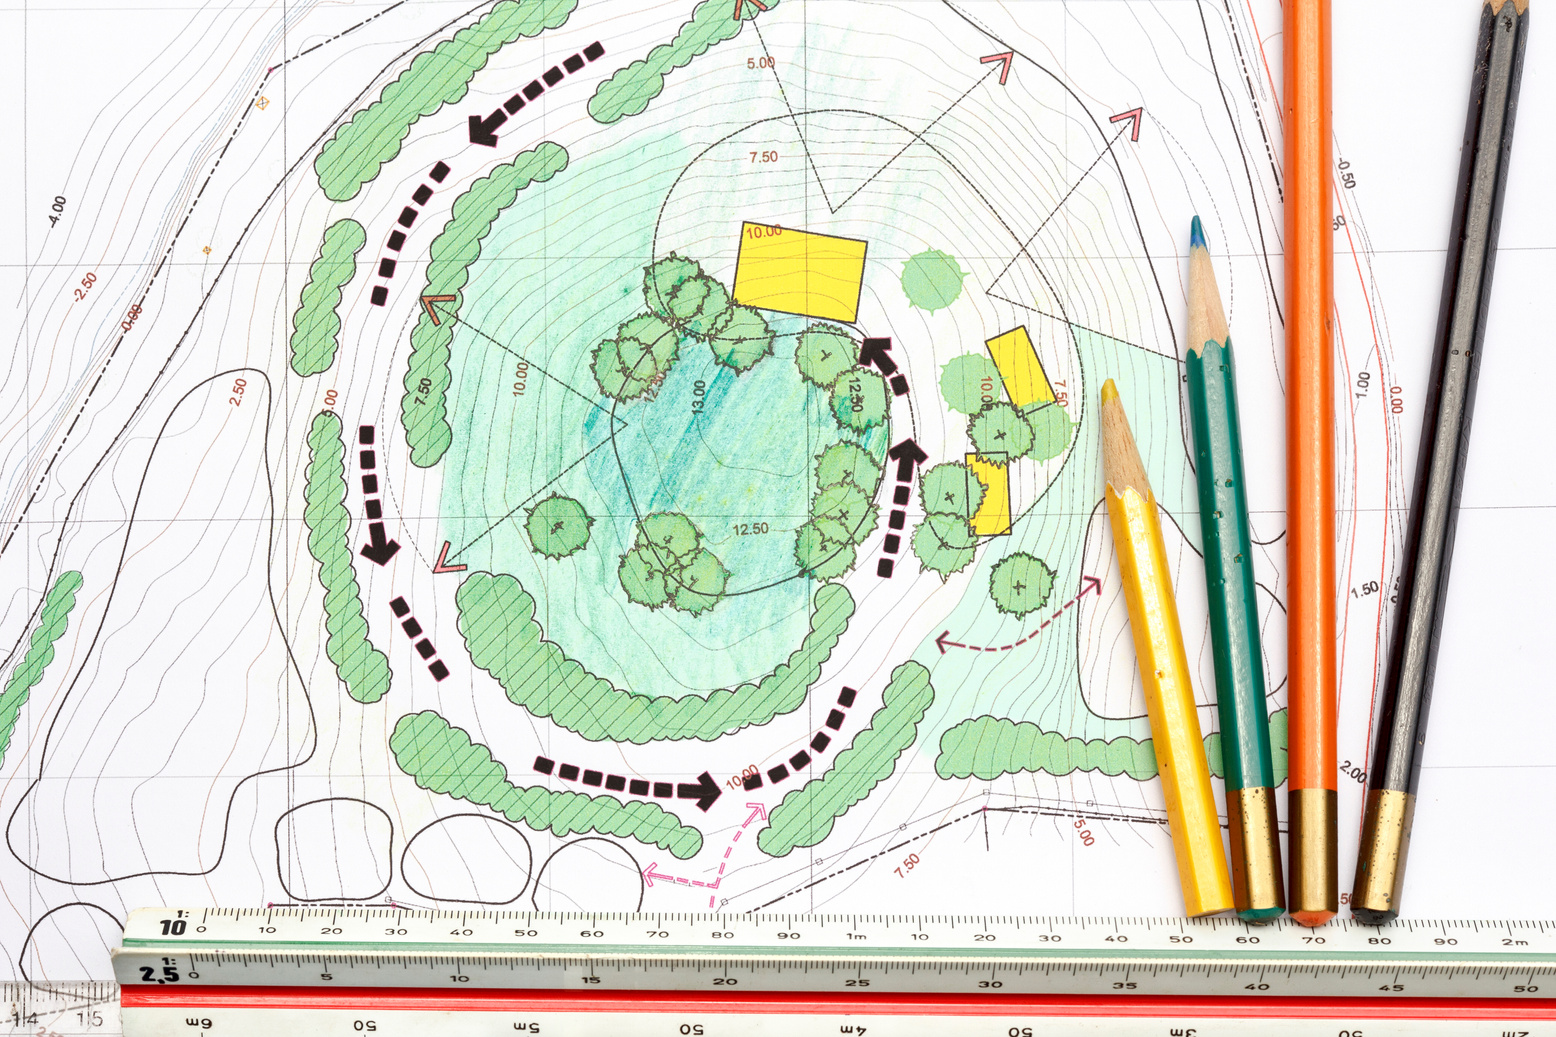 Landscape Architect Designing on Site Analysis Plans